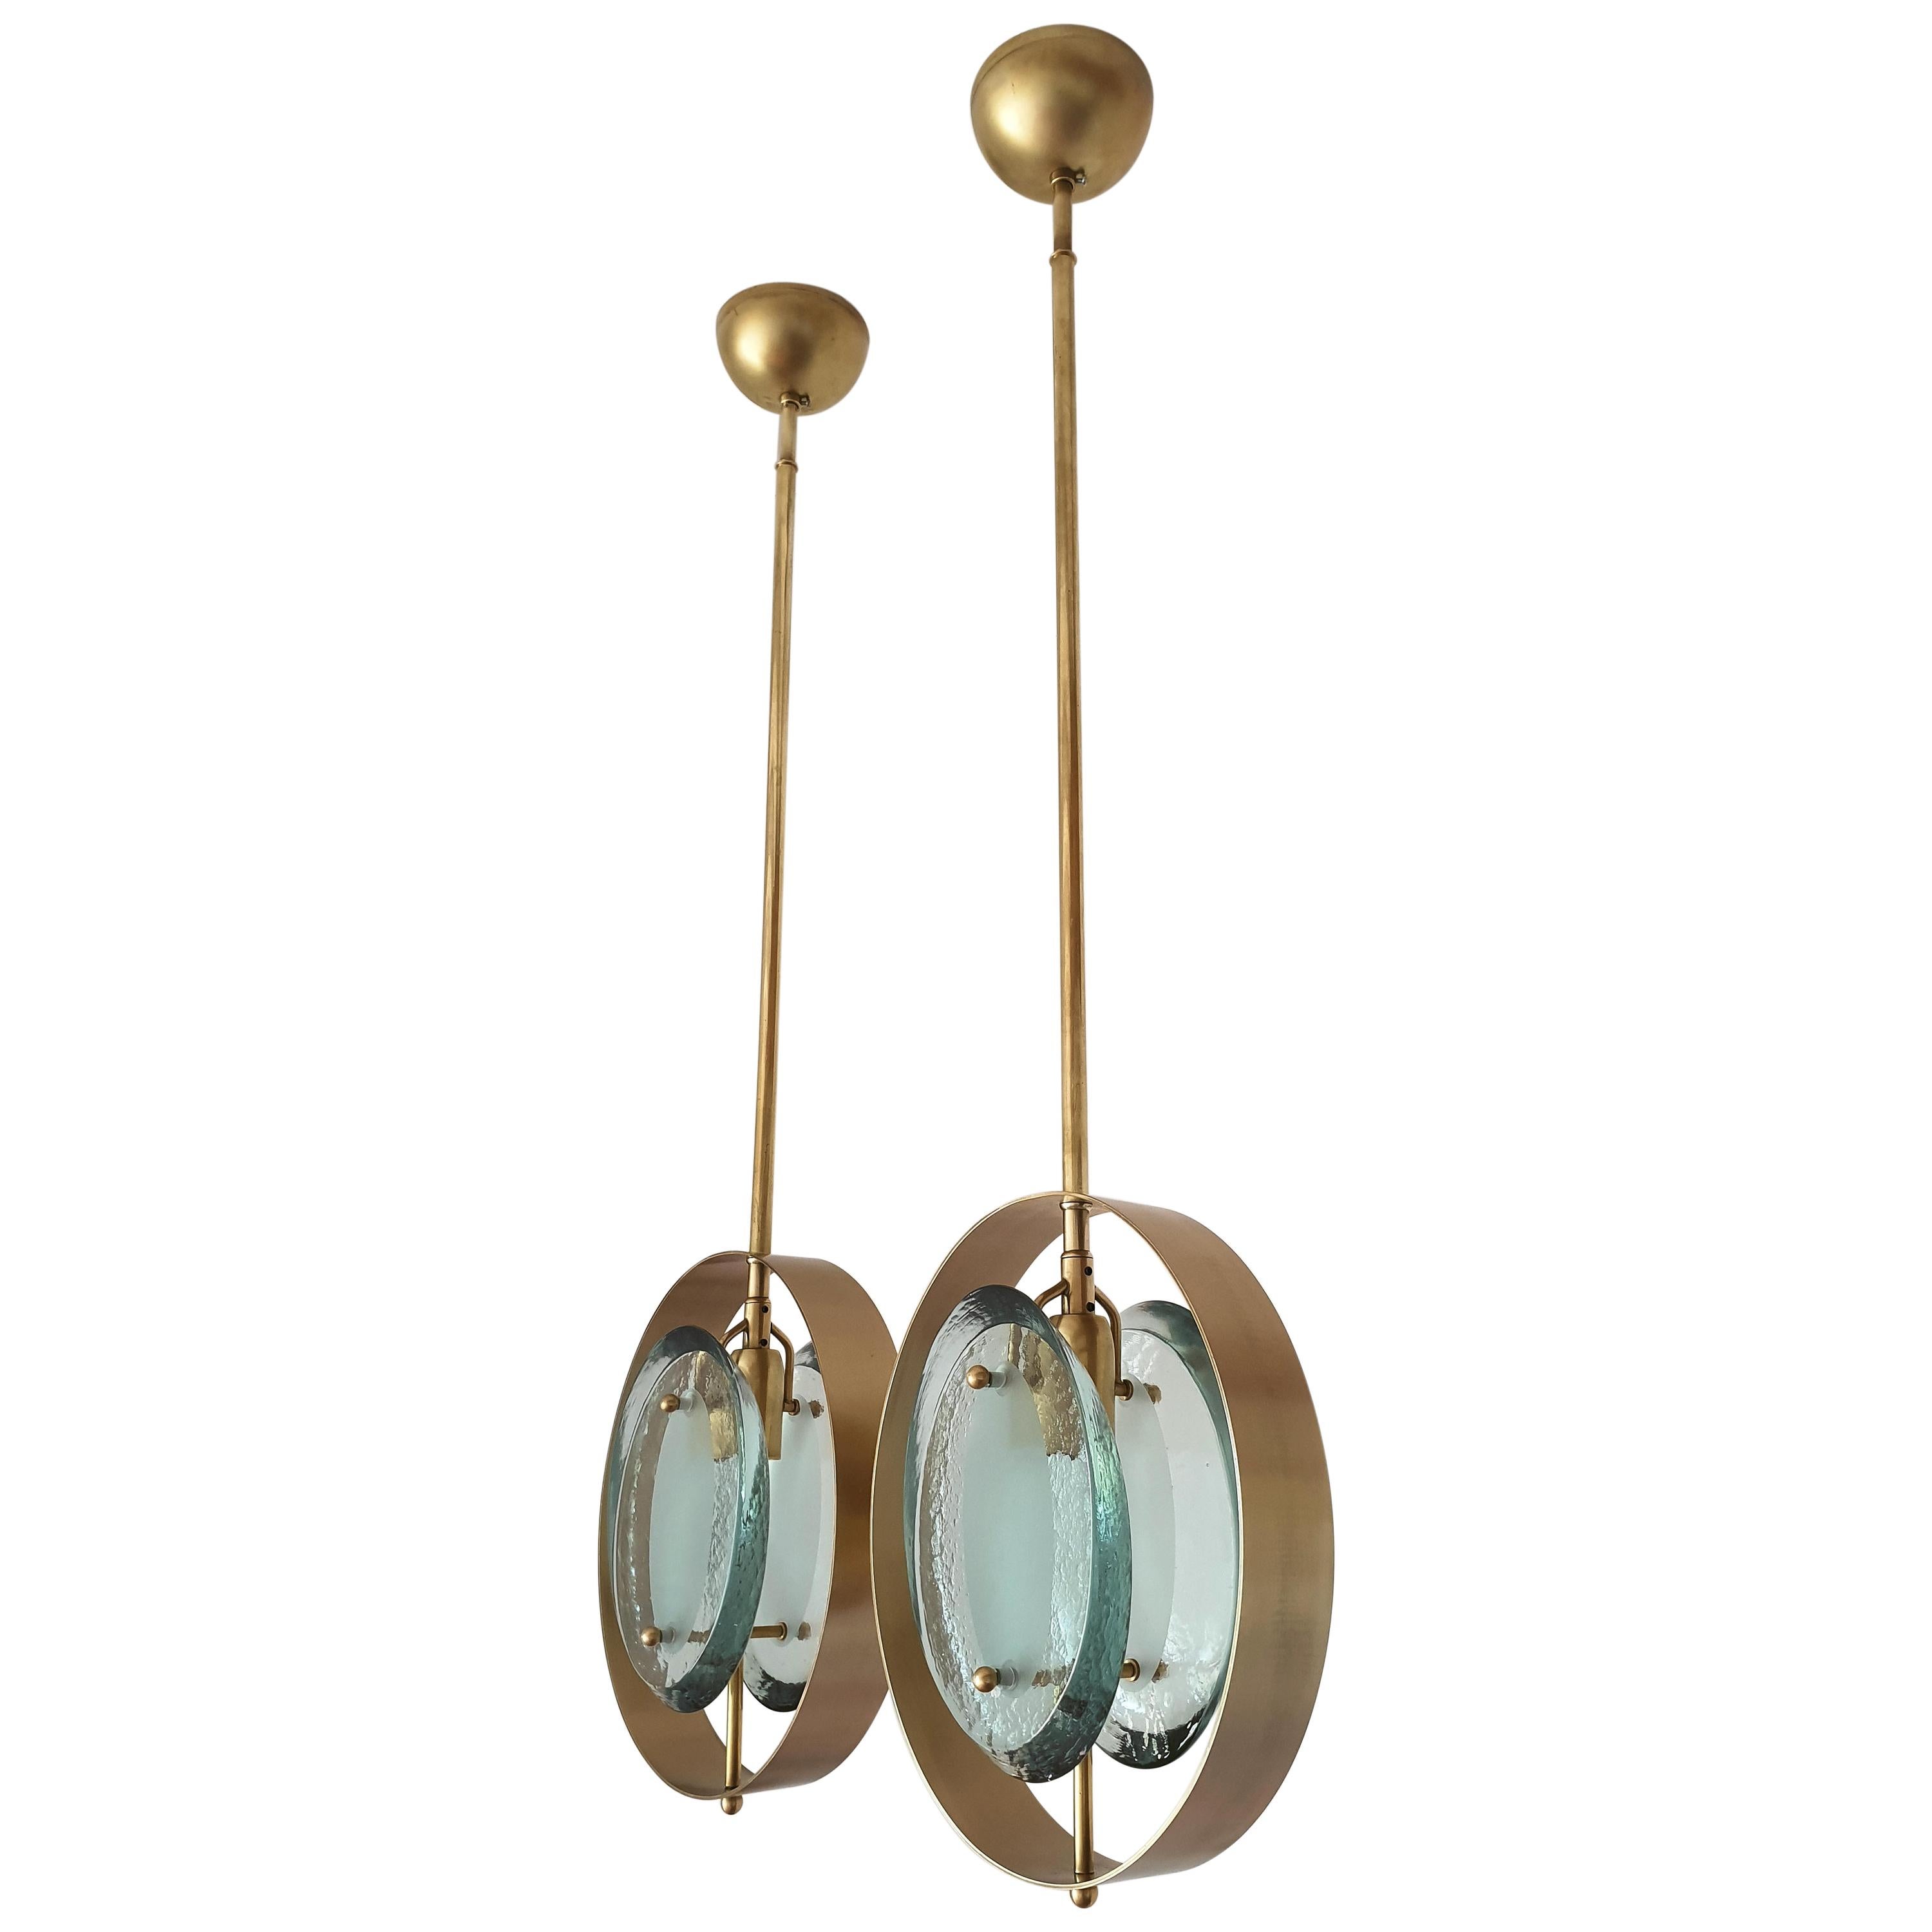 Italian Pair of Mid-Century Modern Max Ingrand Style Brass and Glass Pendants, 1960s